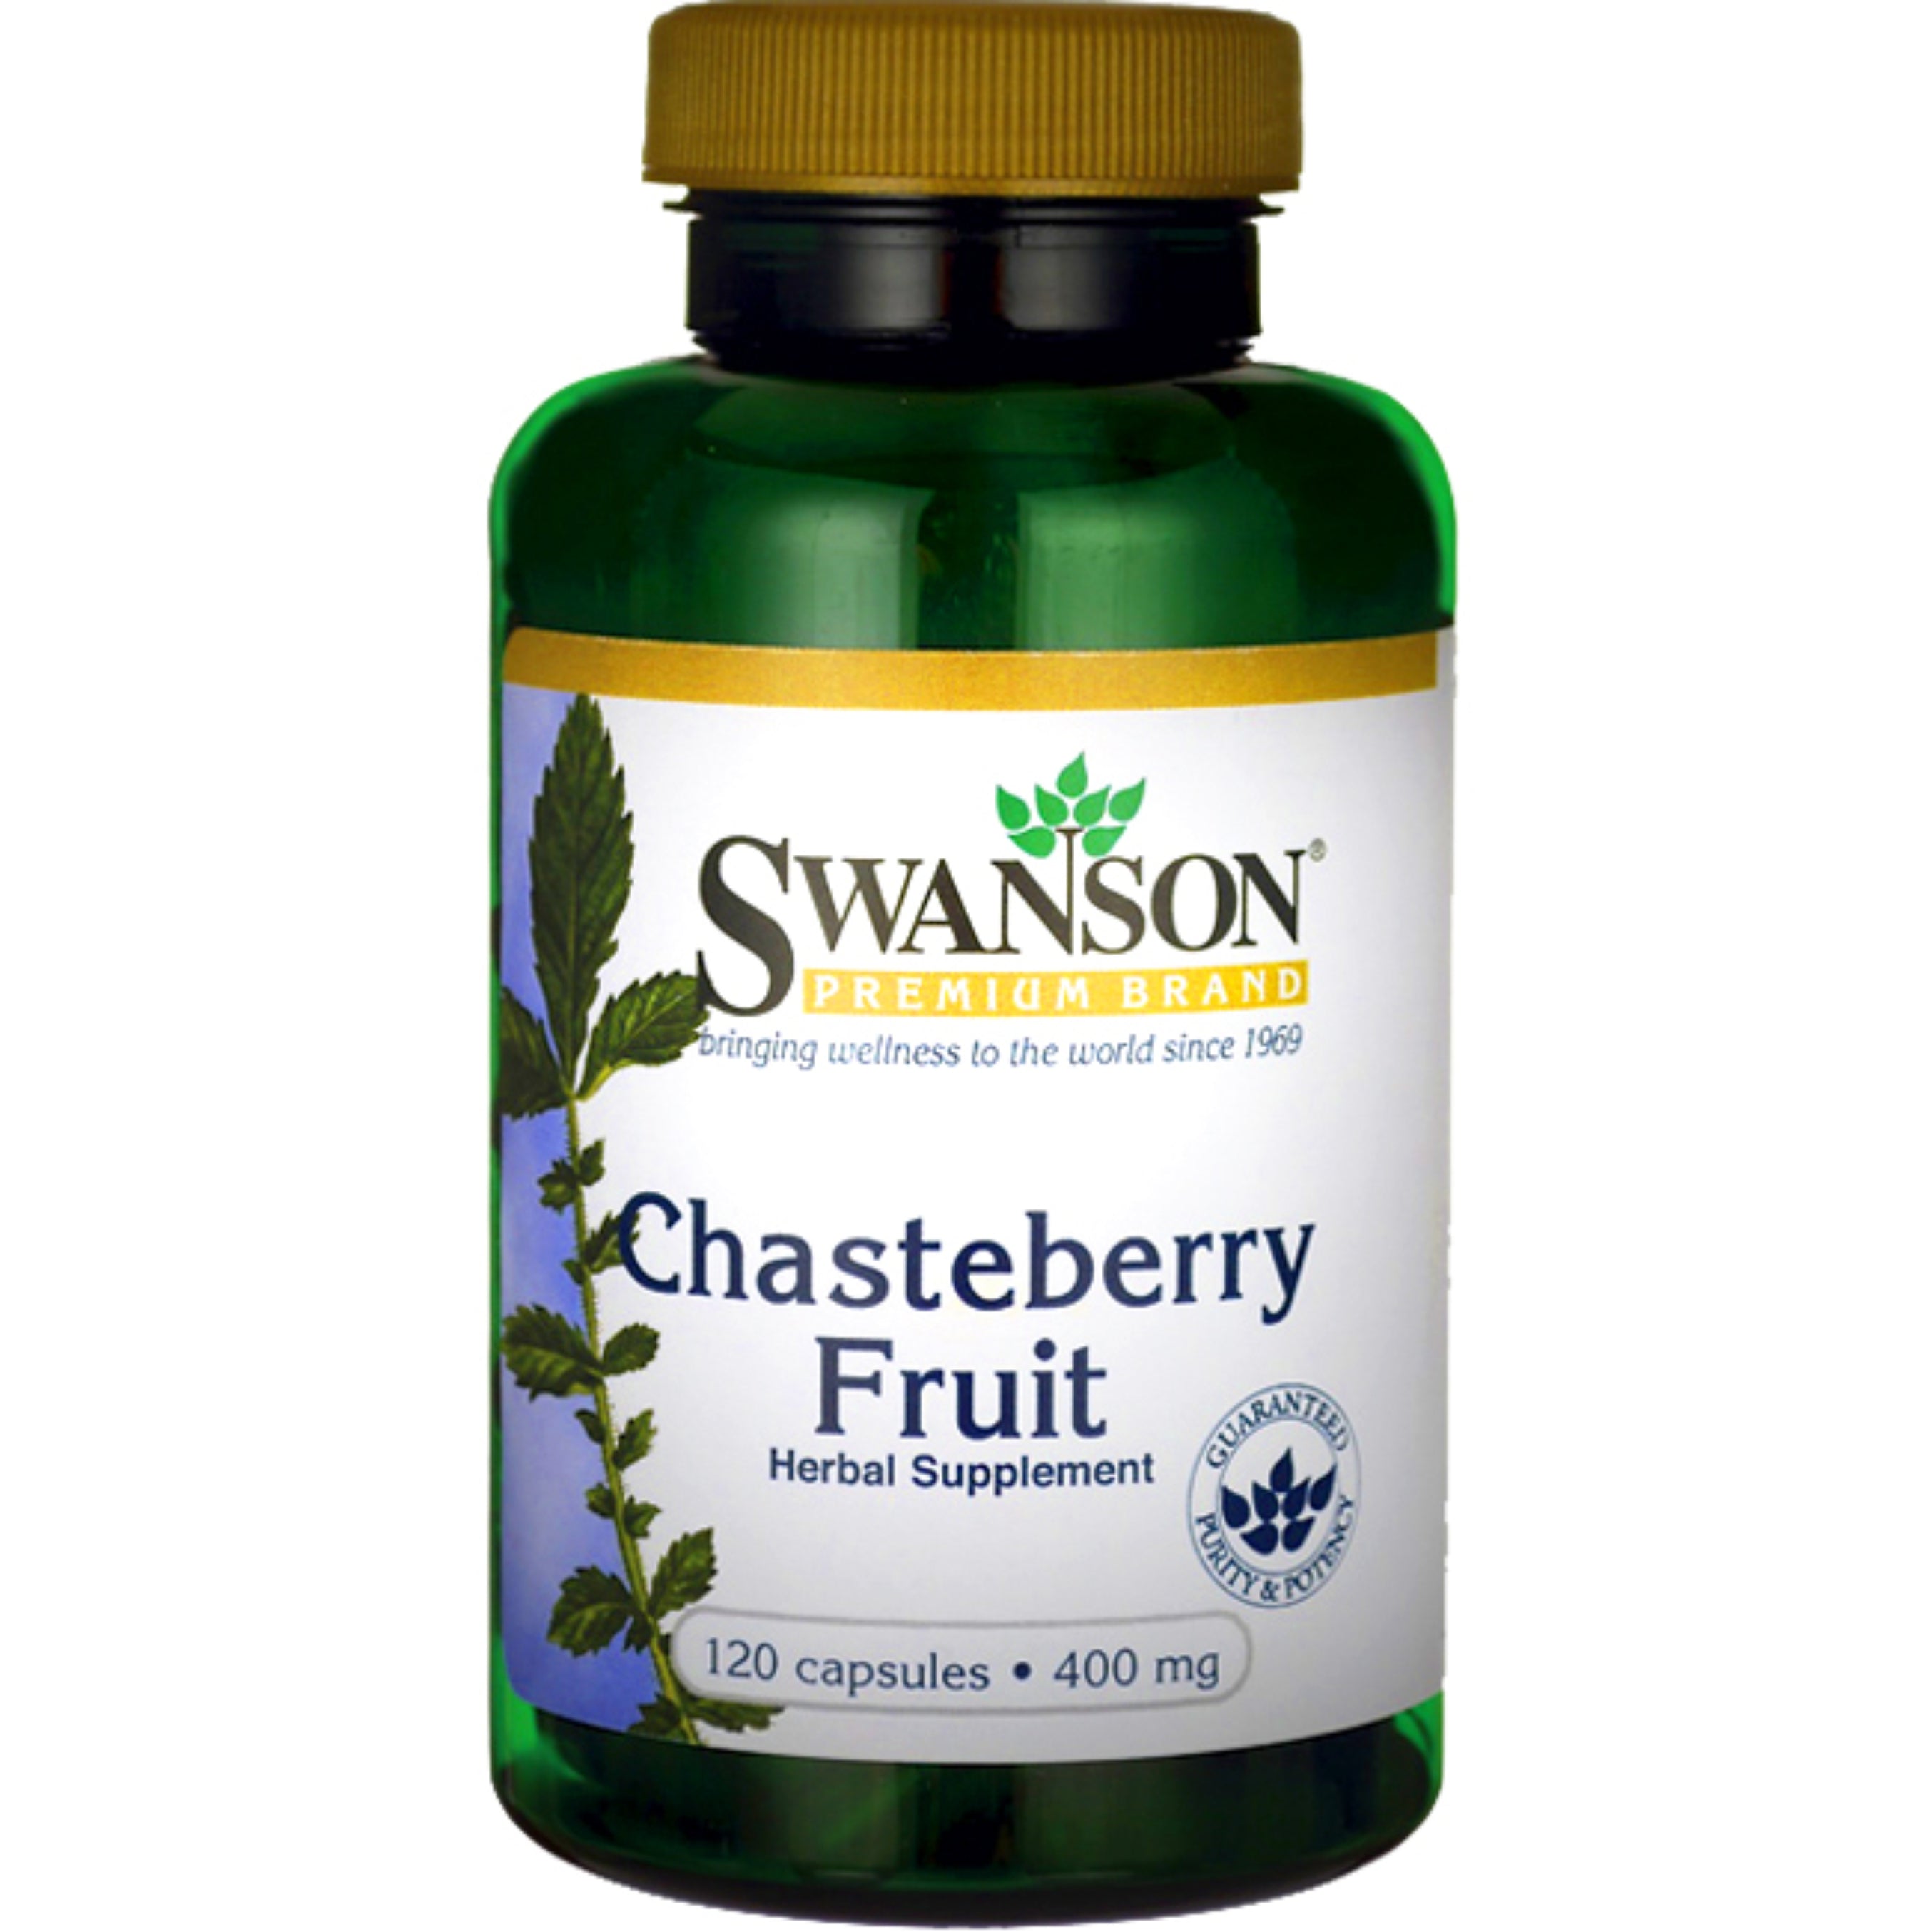 Swanson Chasteberry Fruit Capsules 400mg